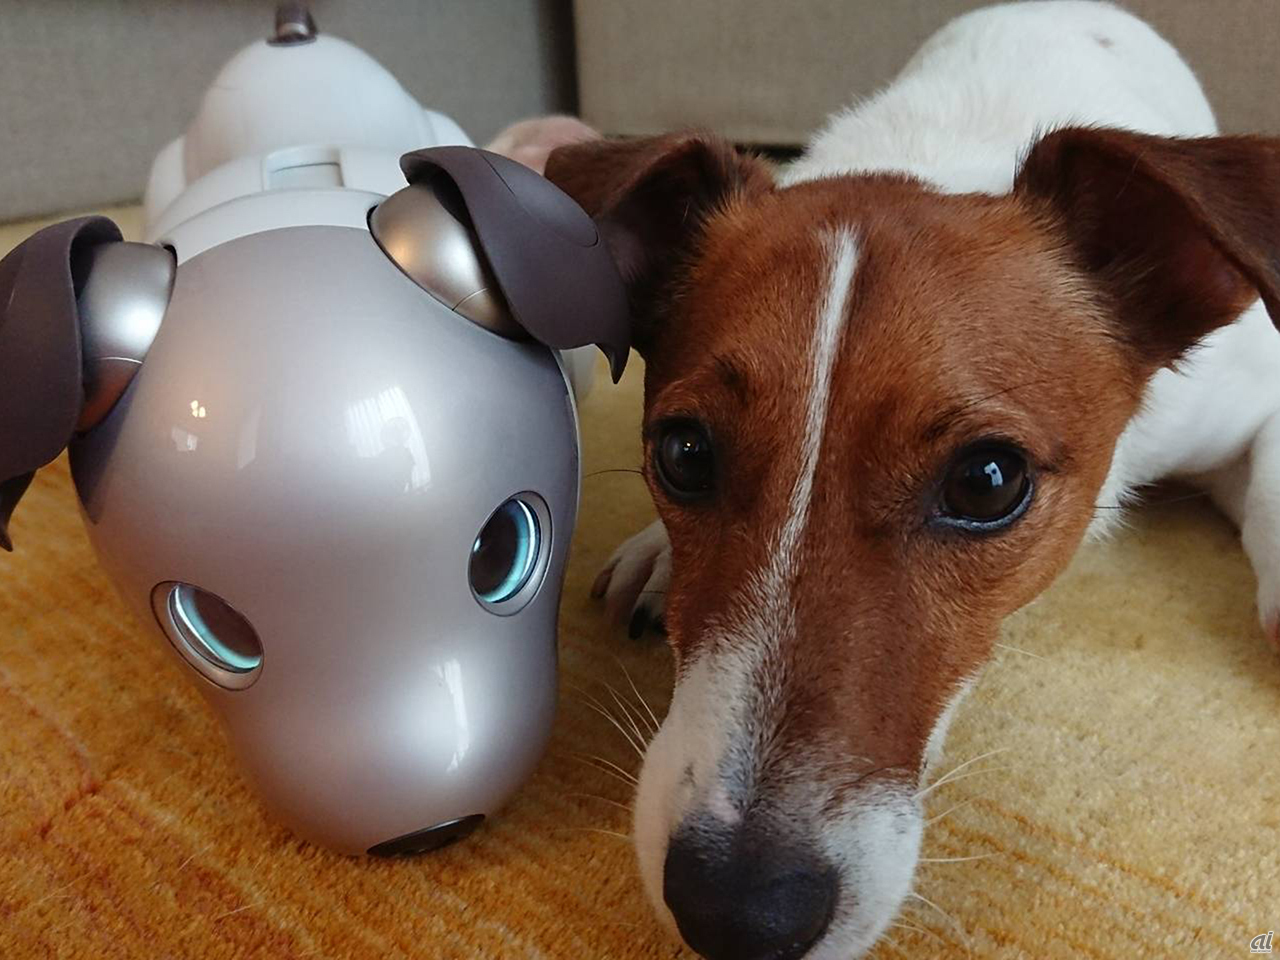 Aiboと犬が2週間の共同生活 犬型ロボットと犬の共生の可能性を探る実験 Cnet Japan